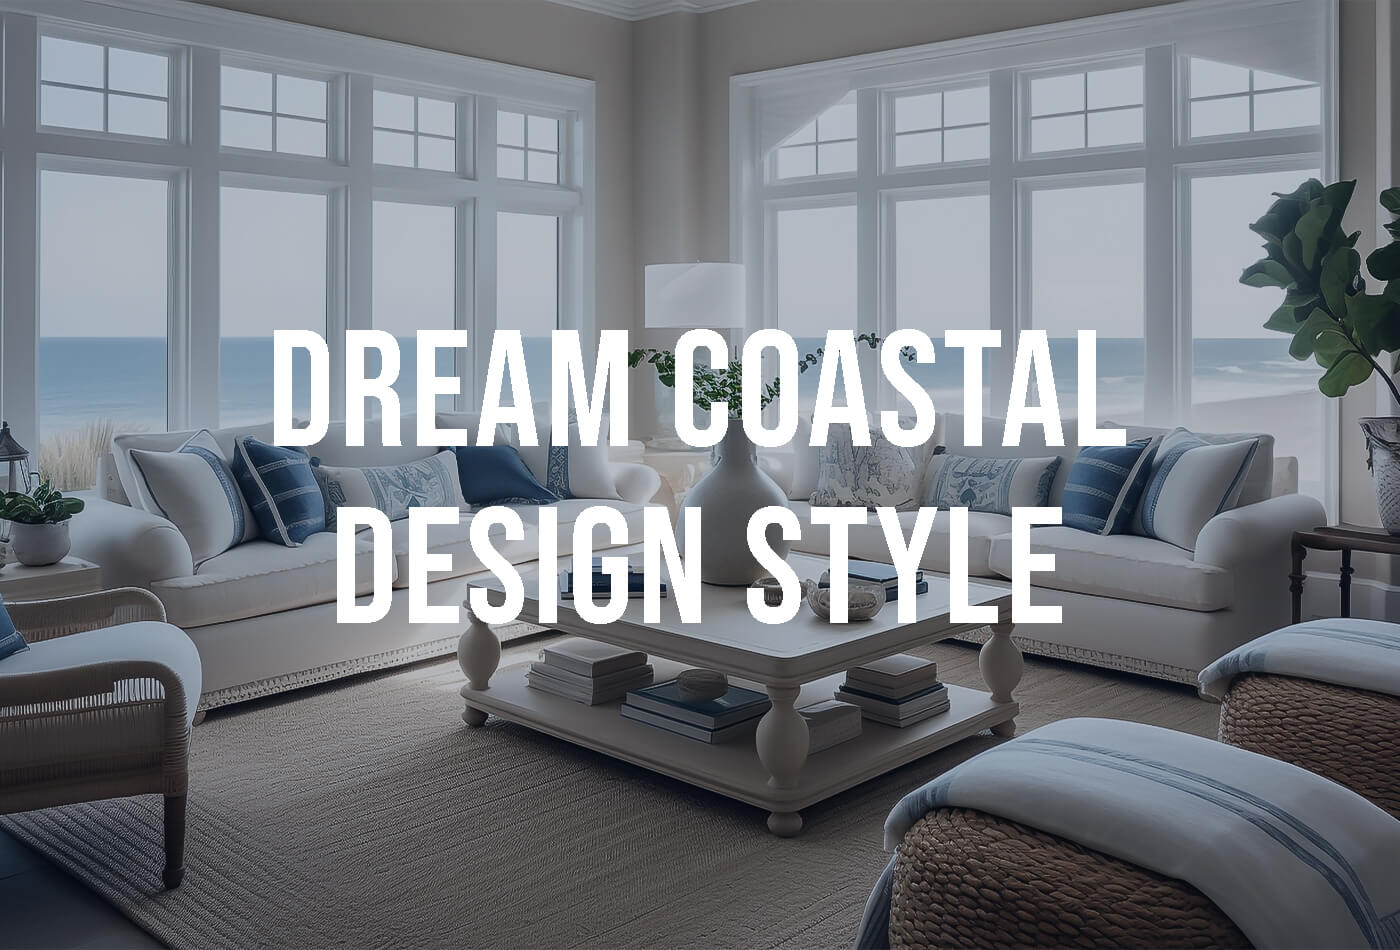 Dream Coastal Design Style Living Room, Bedroom, Kitchen